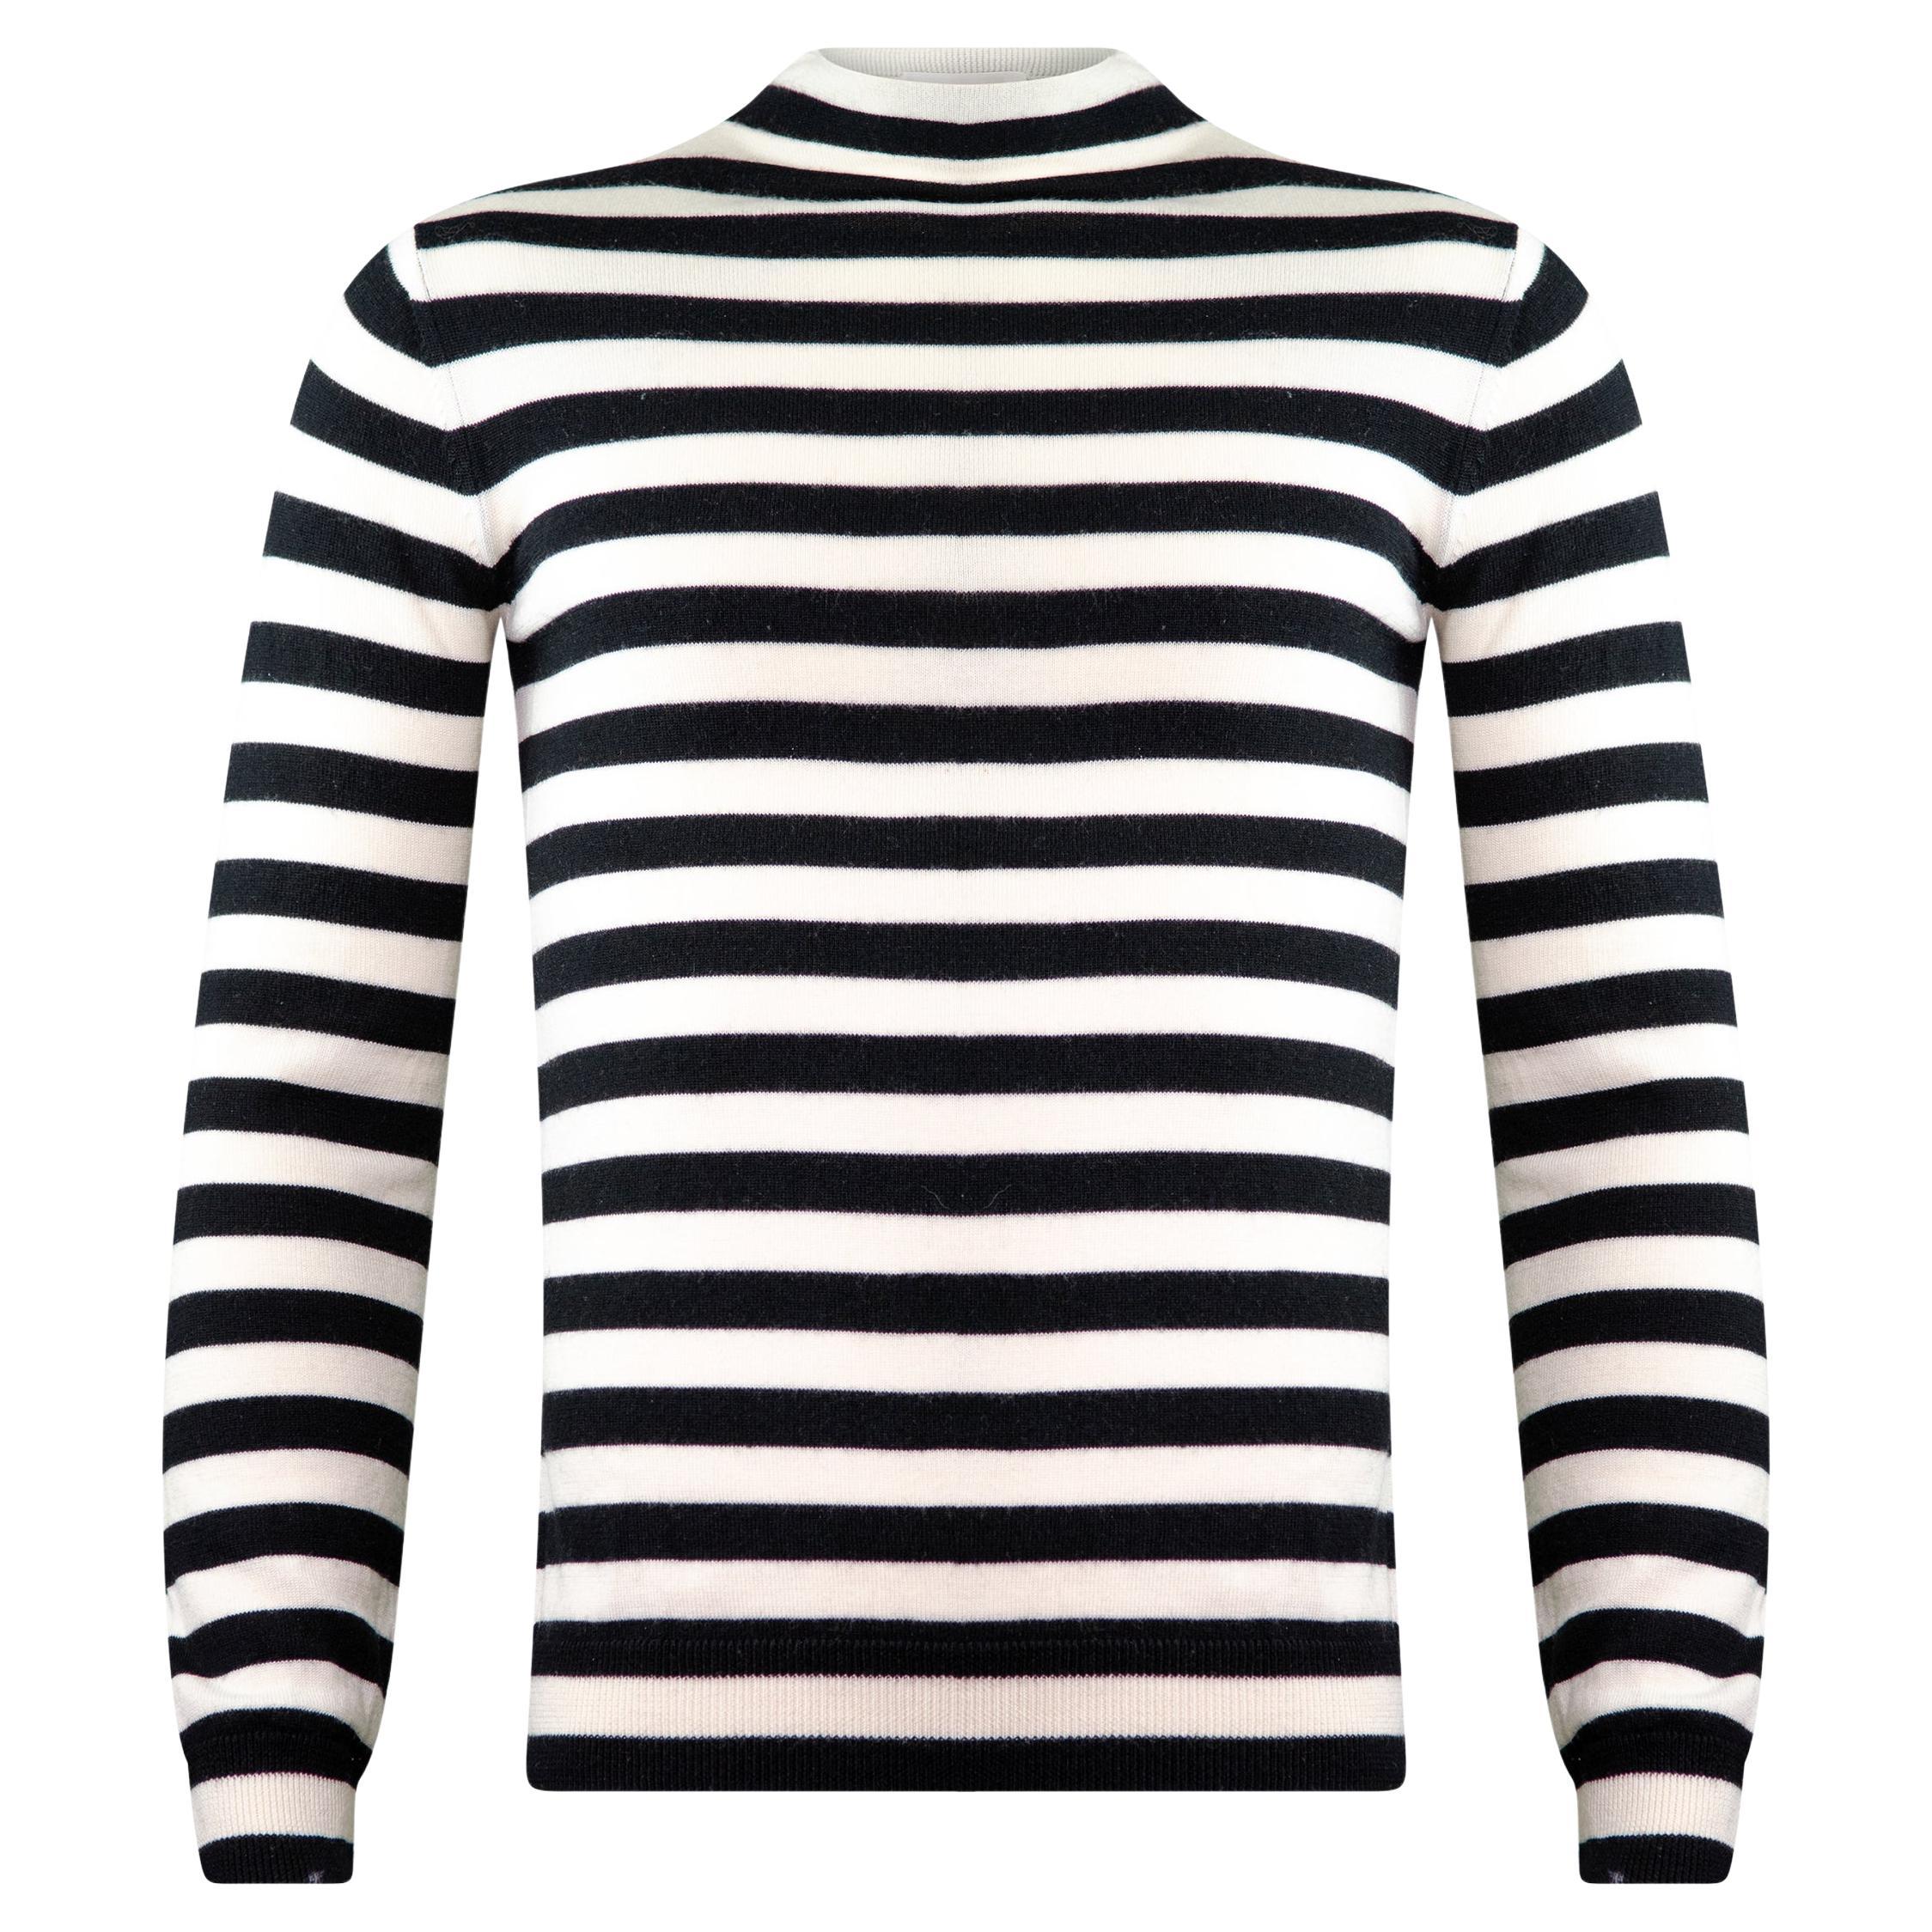 SAINT LAURENT By HEDI SLIMANE F/W 2015 Striped Sweater S